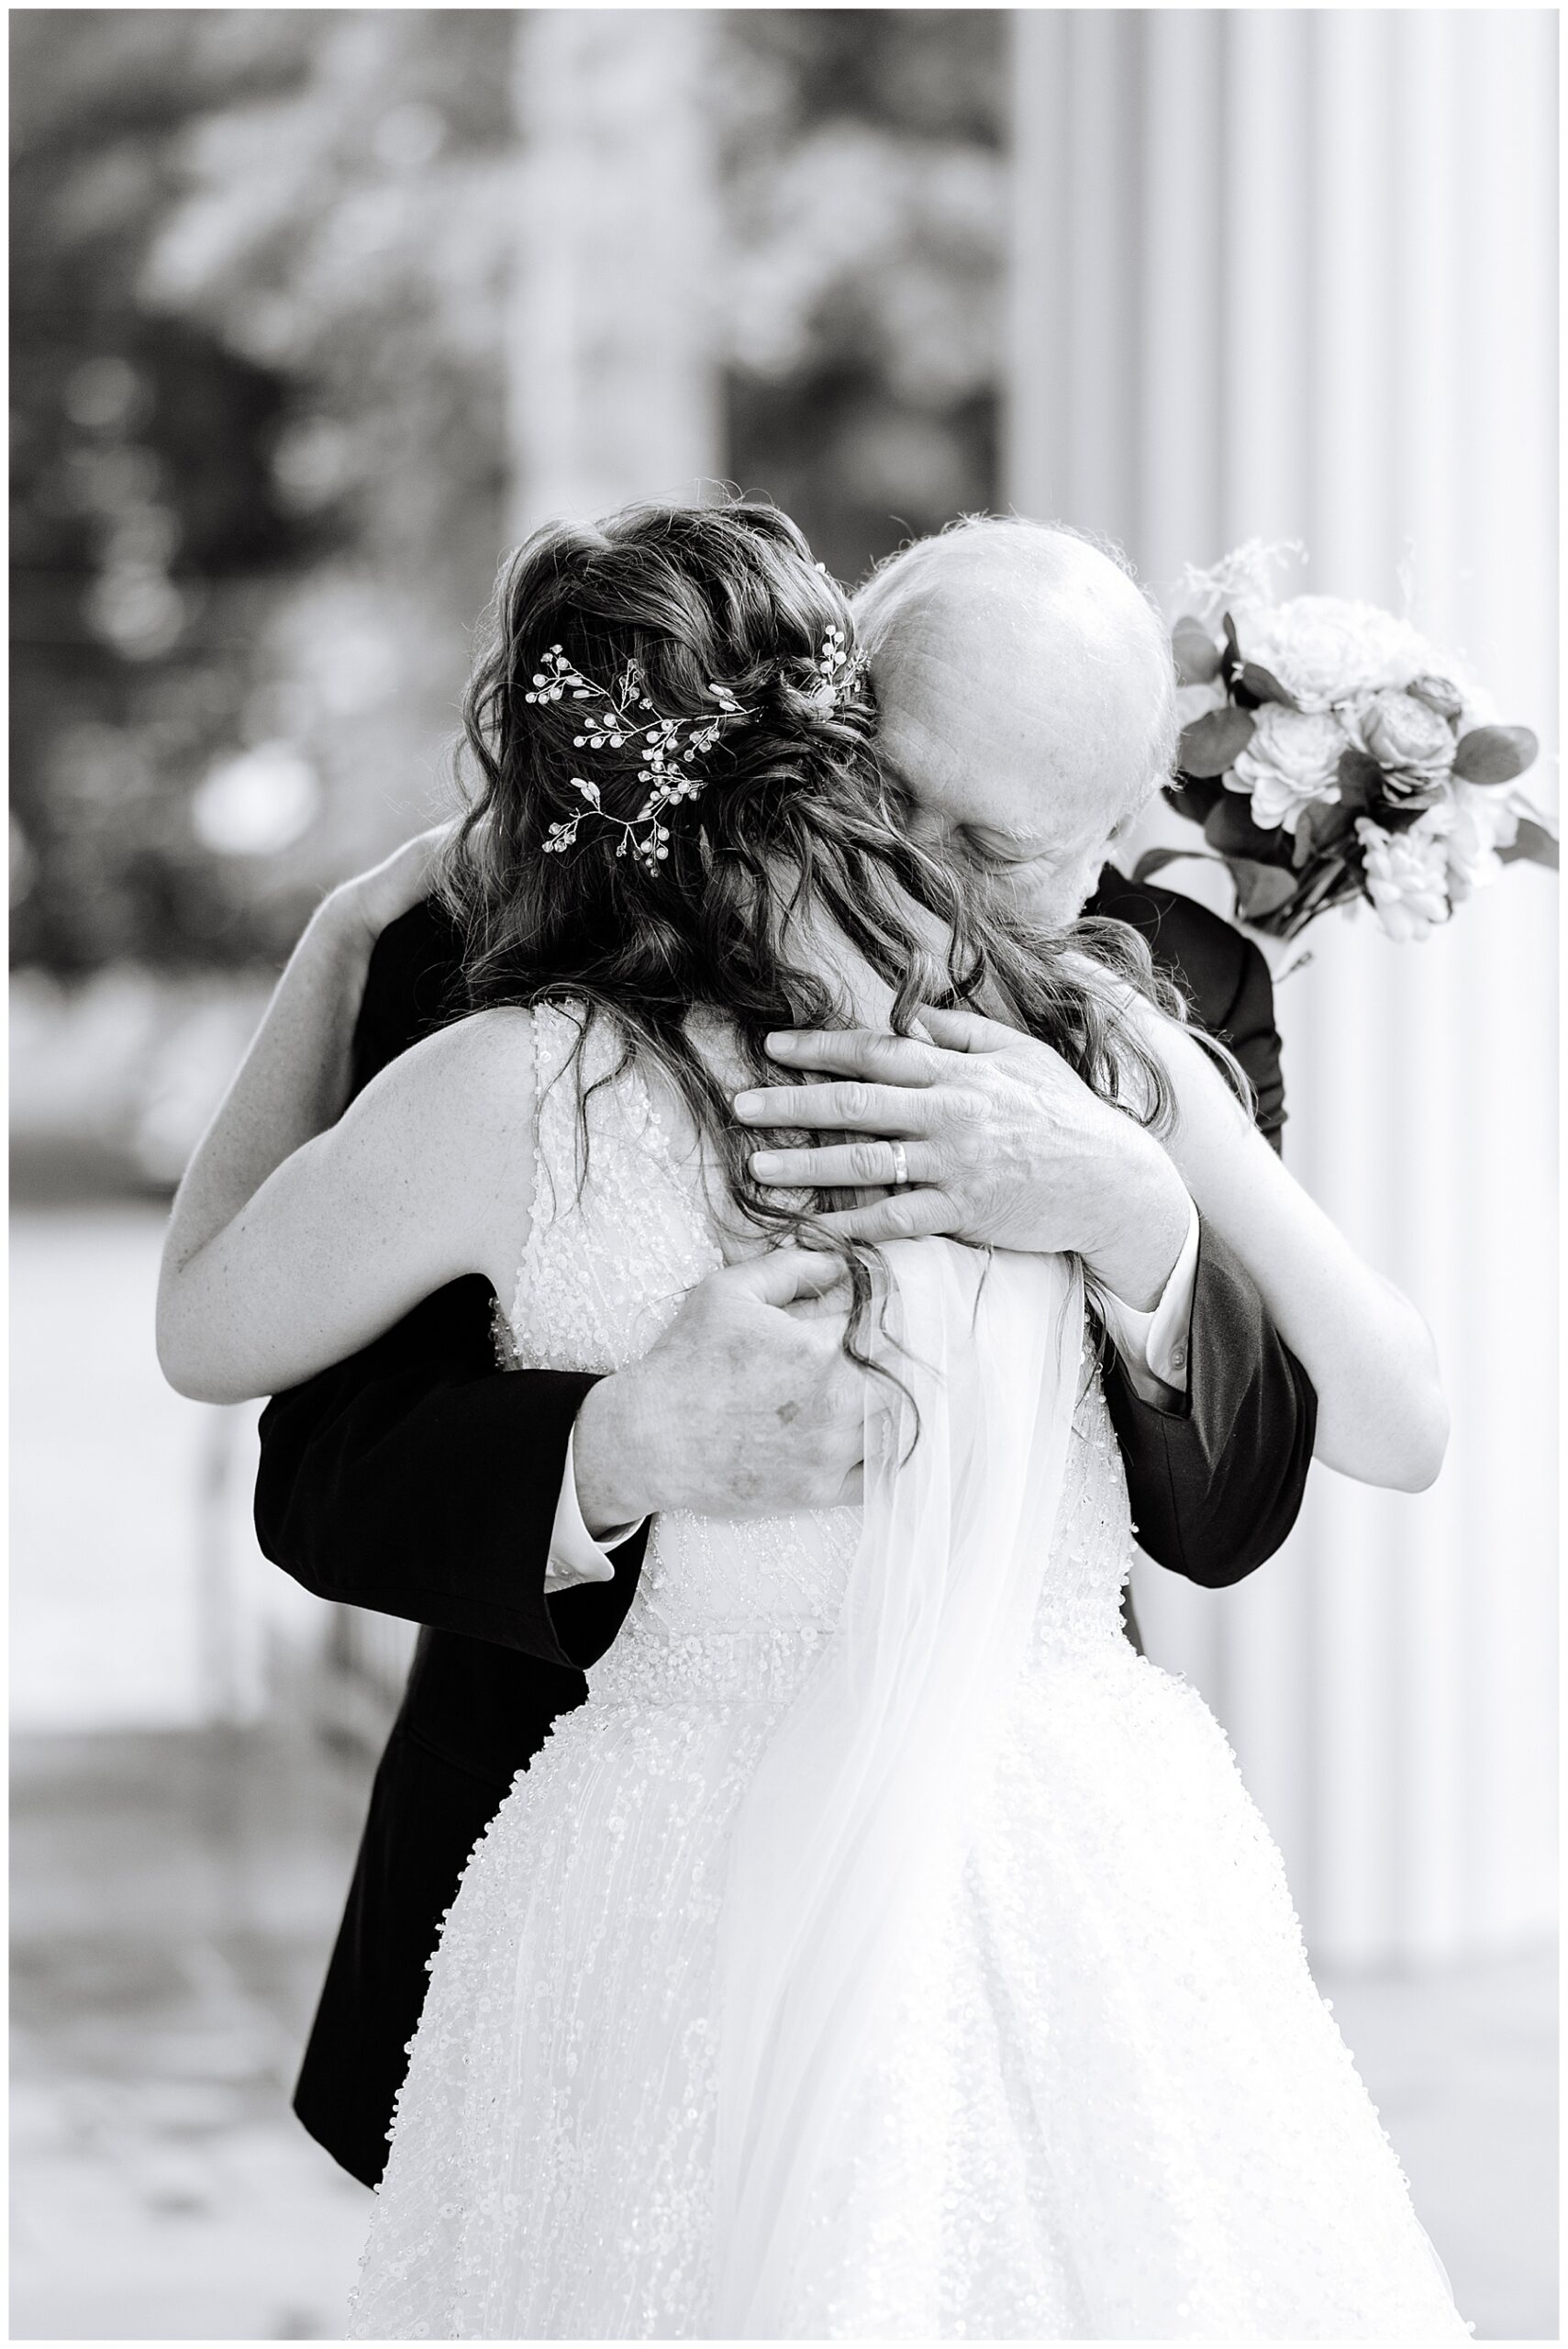 Charlotte wedding photographer captures bride hugging family member during emotional first look.